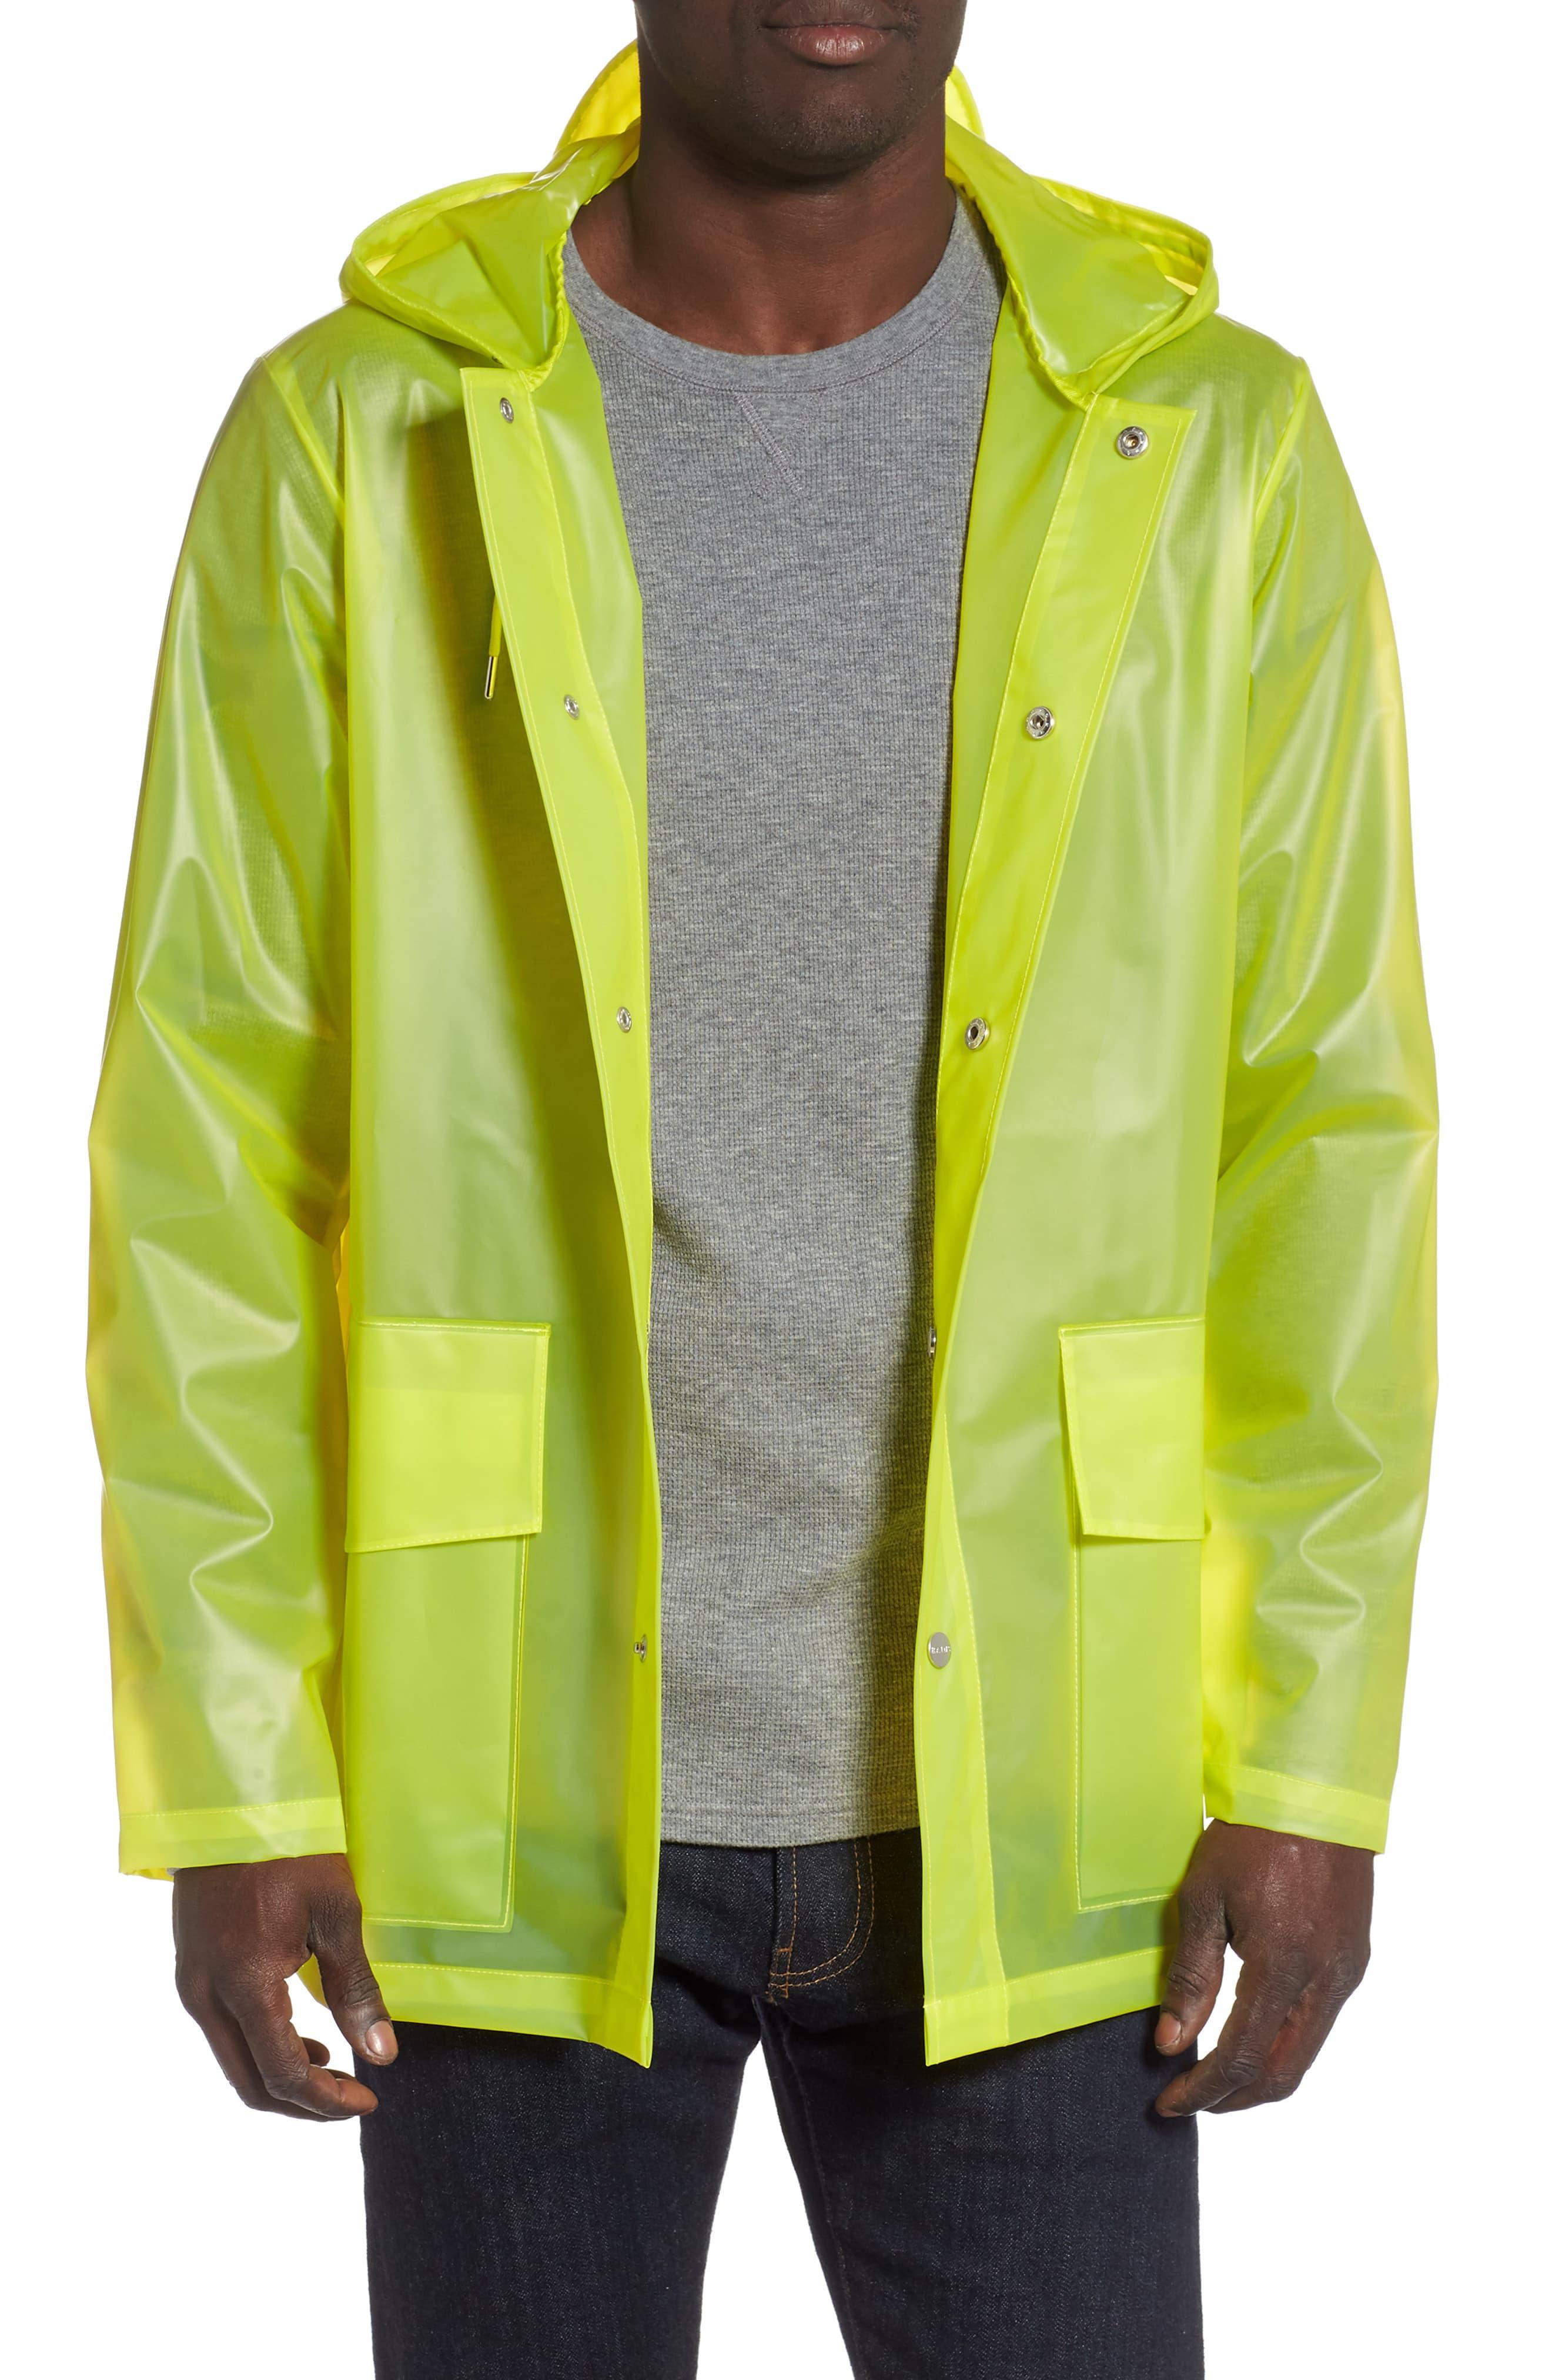 Rains Hooded Rain Jacket in Yellow for Men - Lyst